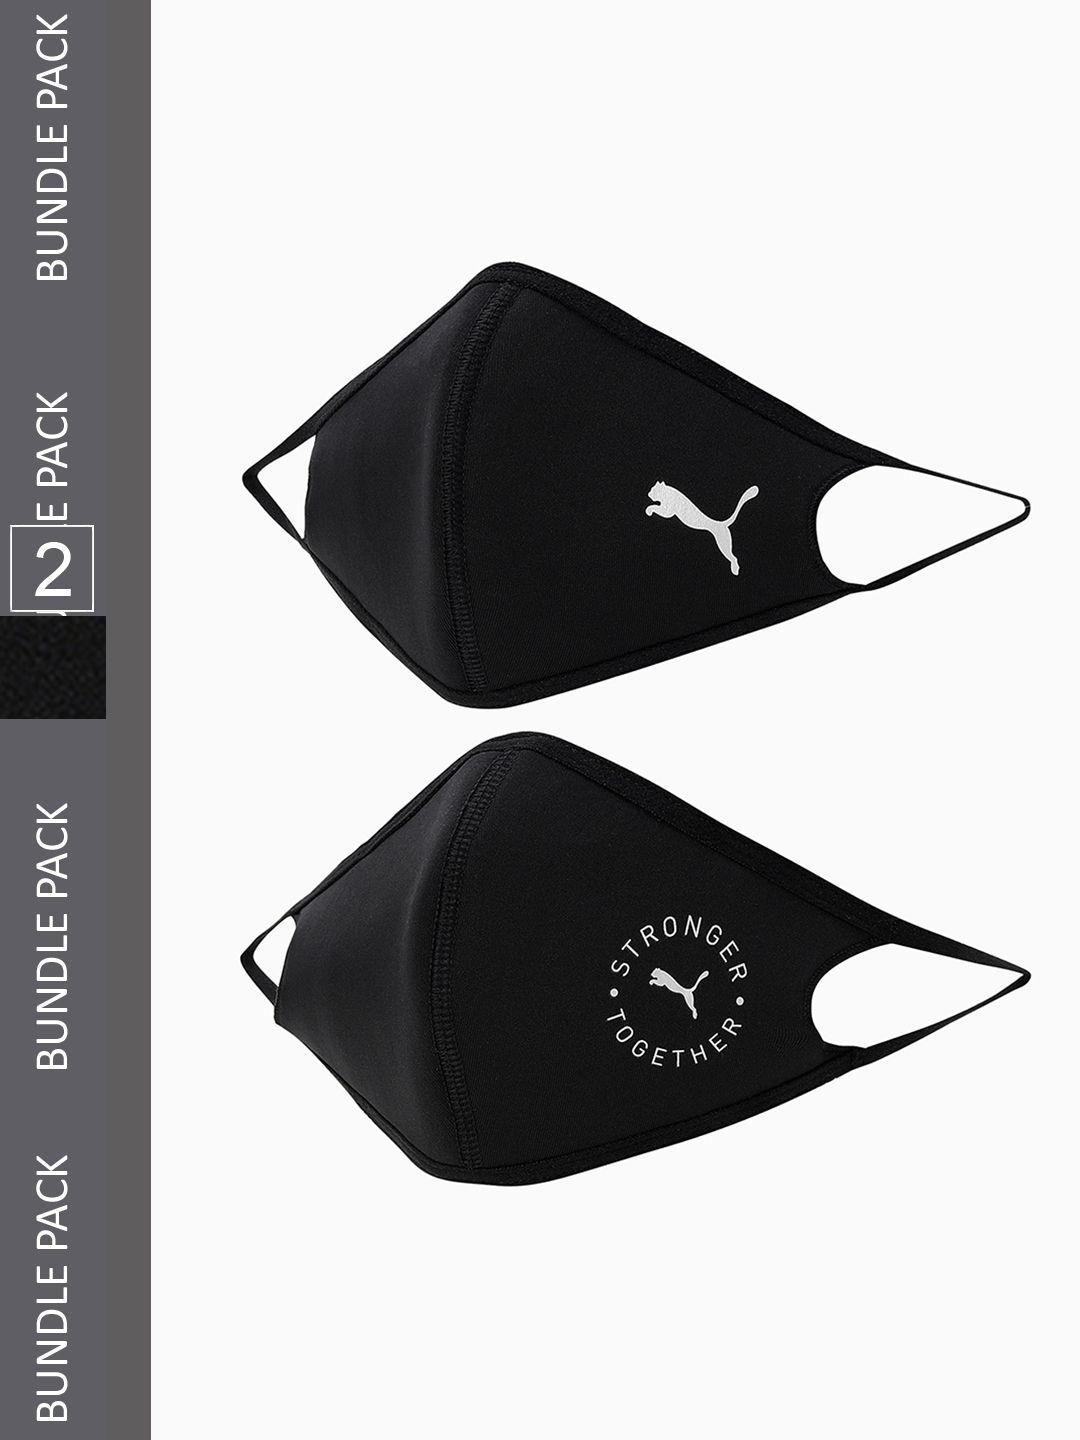 puma pack of 2 brand logo printed outdoor running face masks